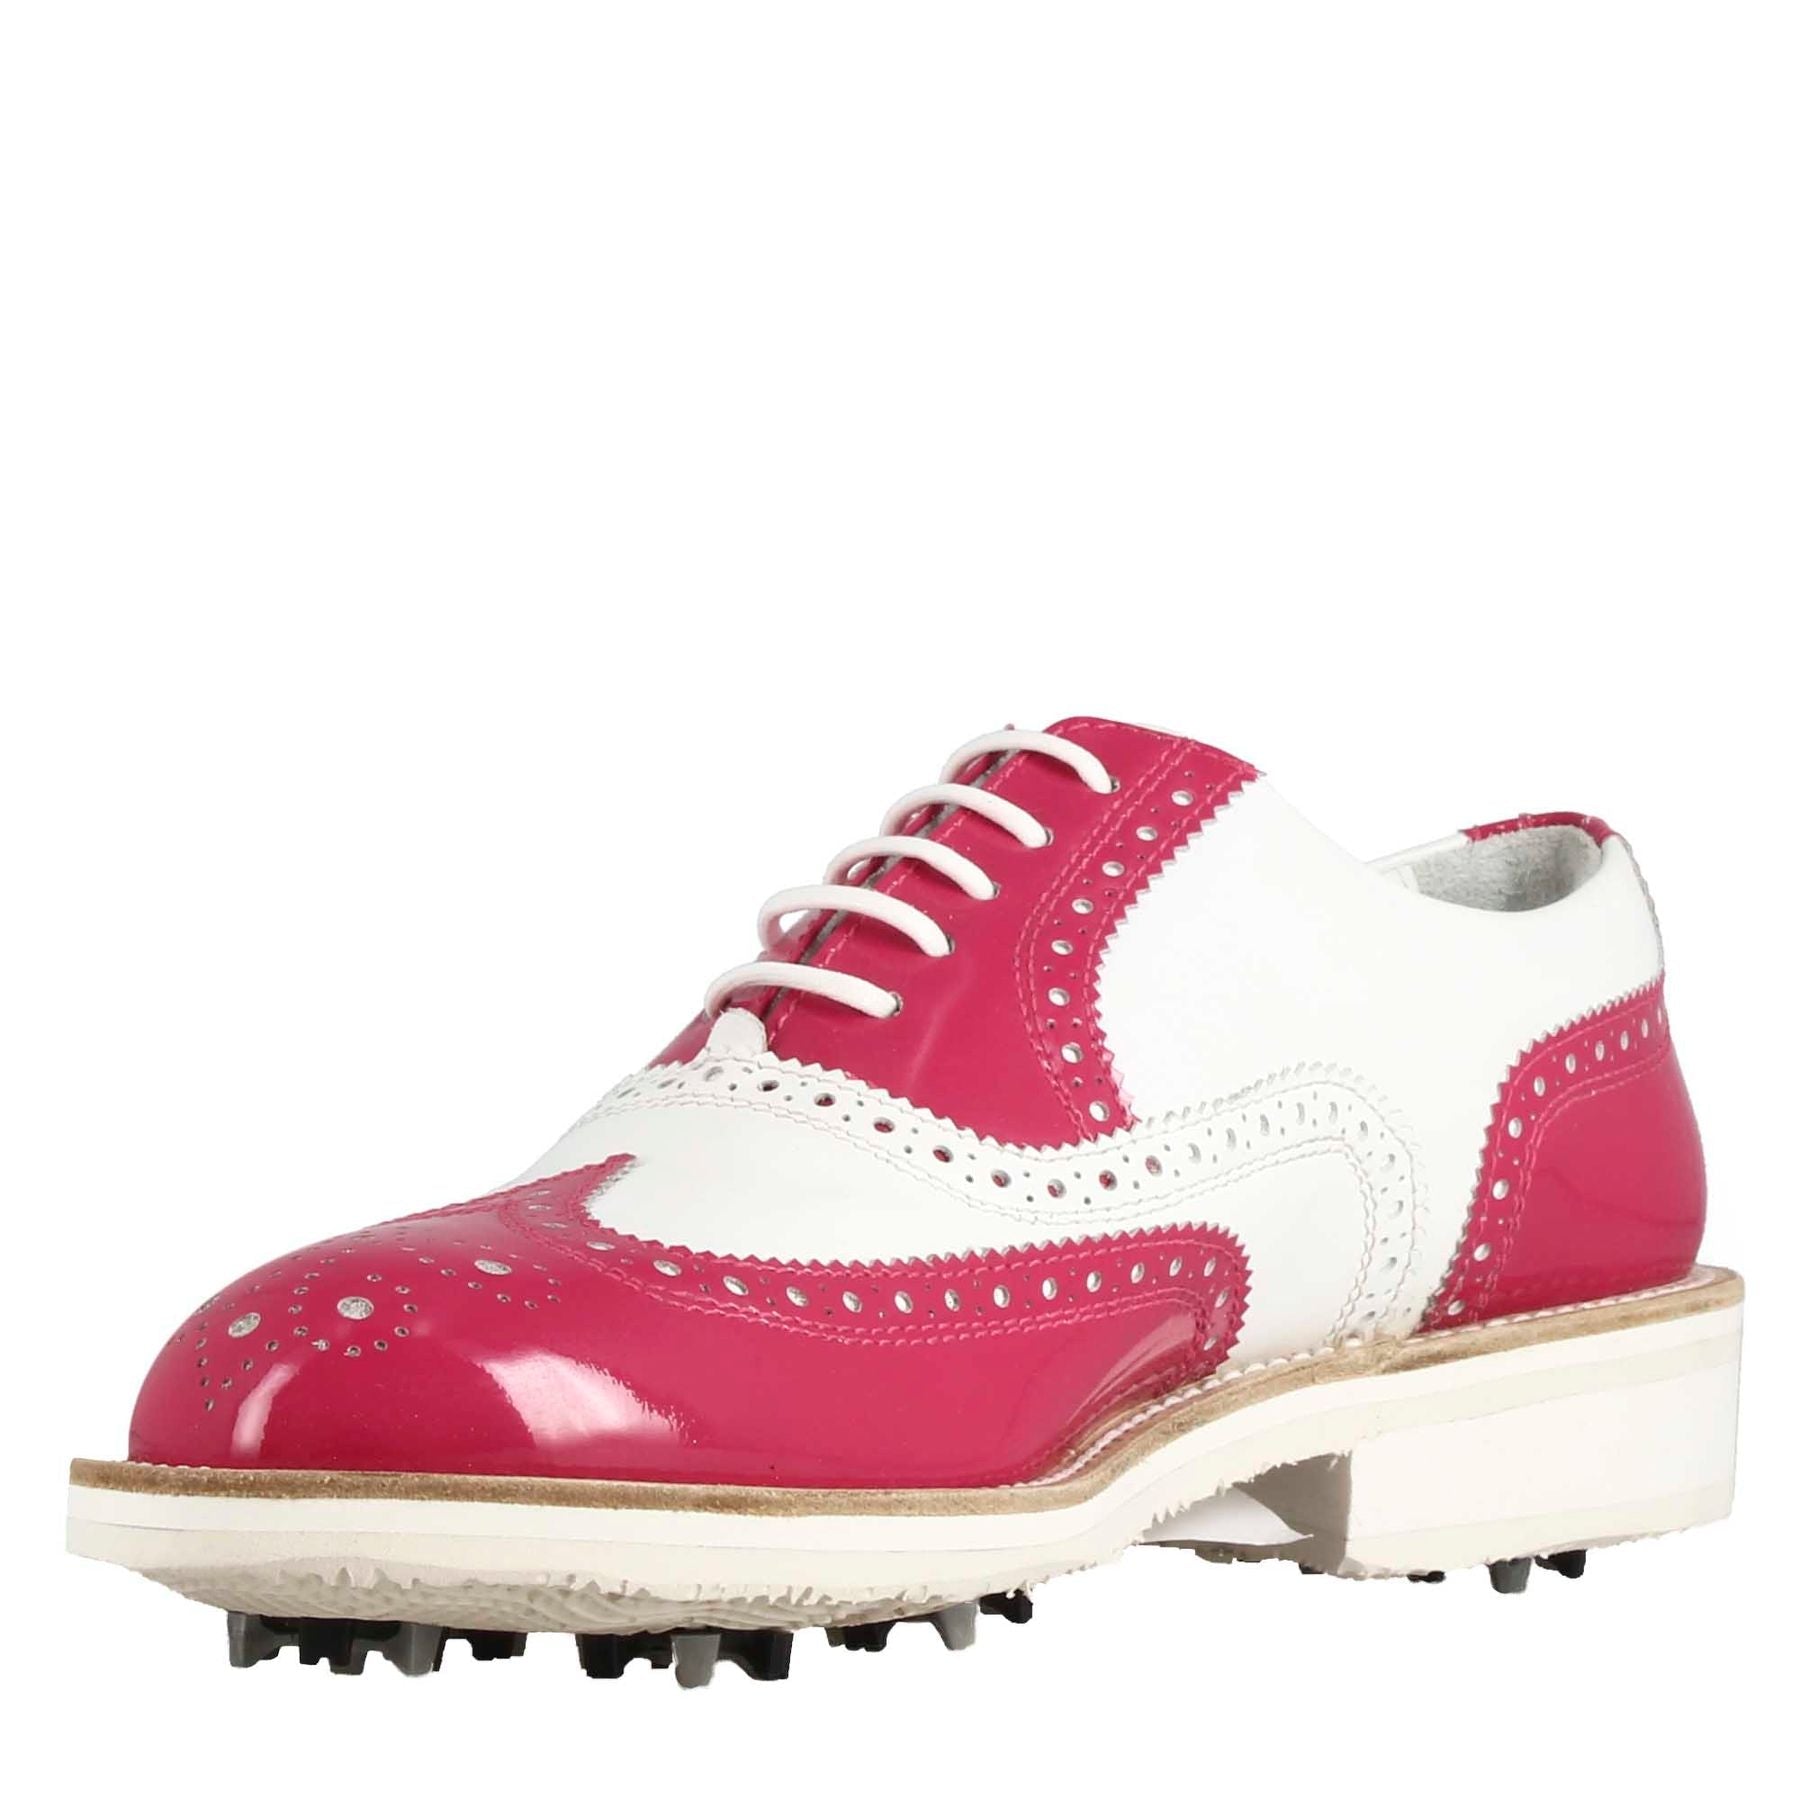 Handgefertigte Damen-Golfschuhe aus glänzendem weiß-rosa Leder